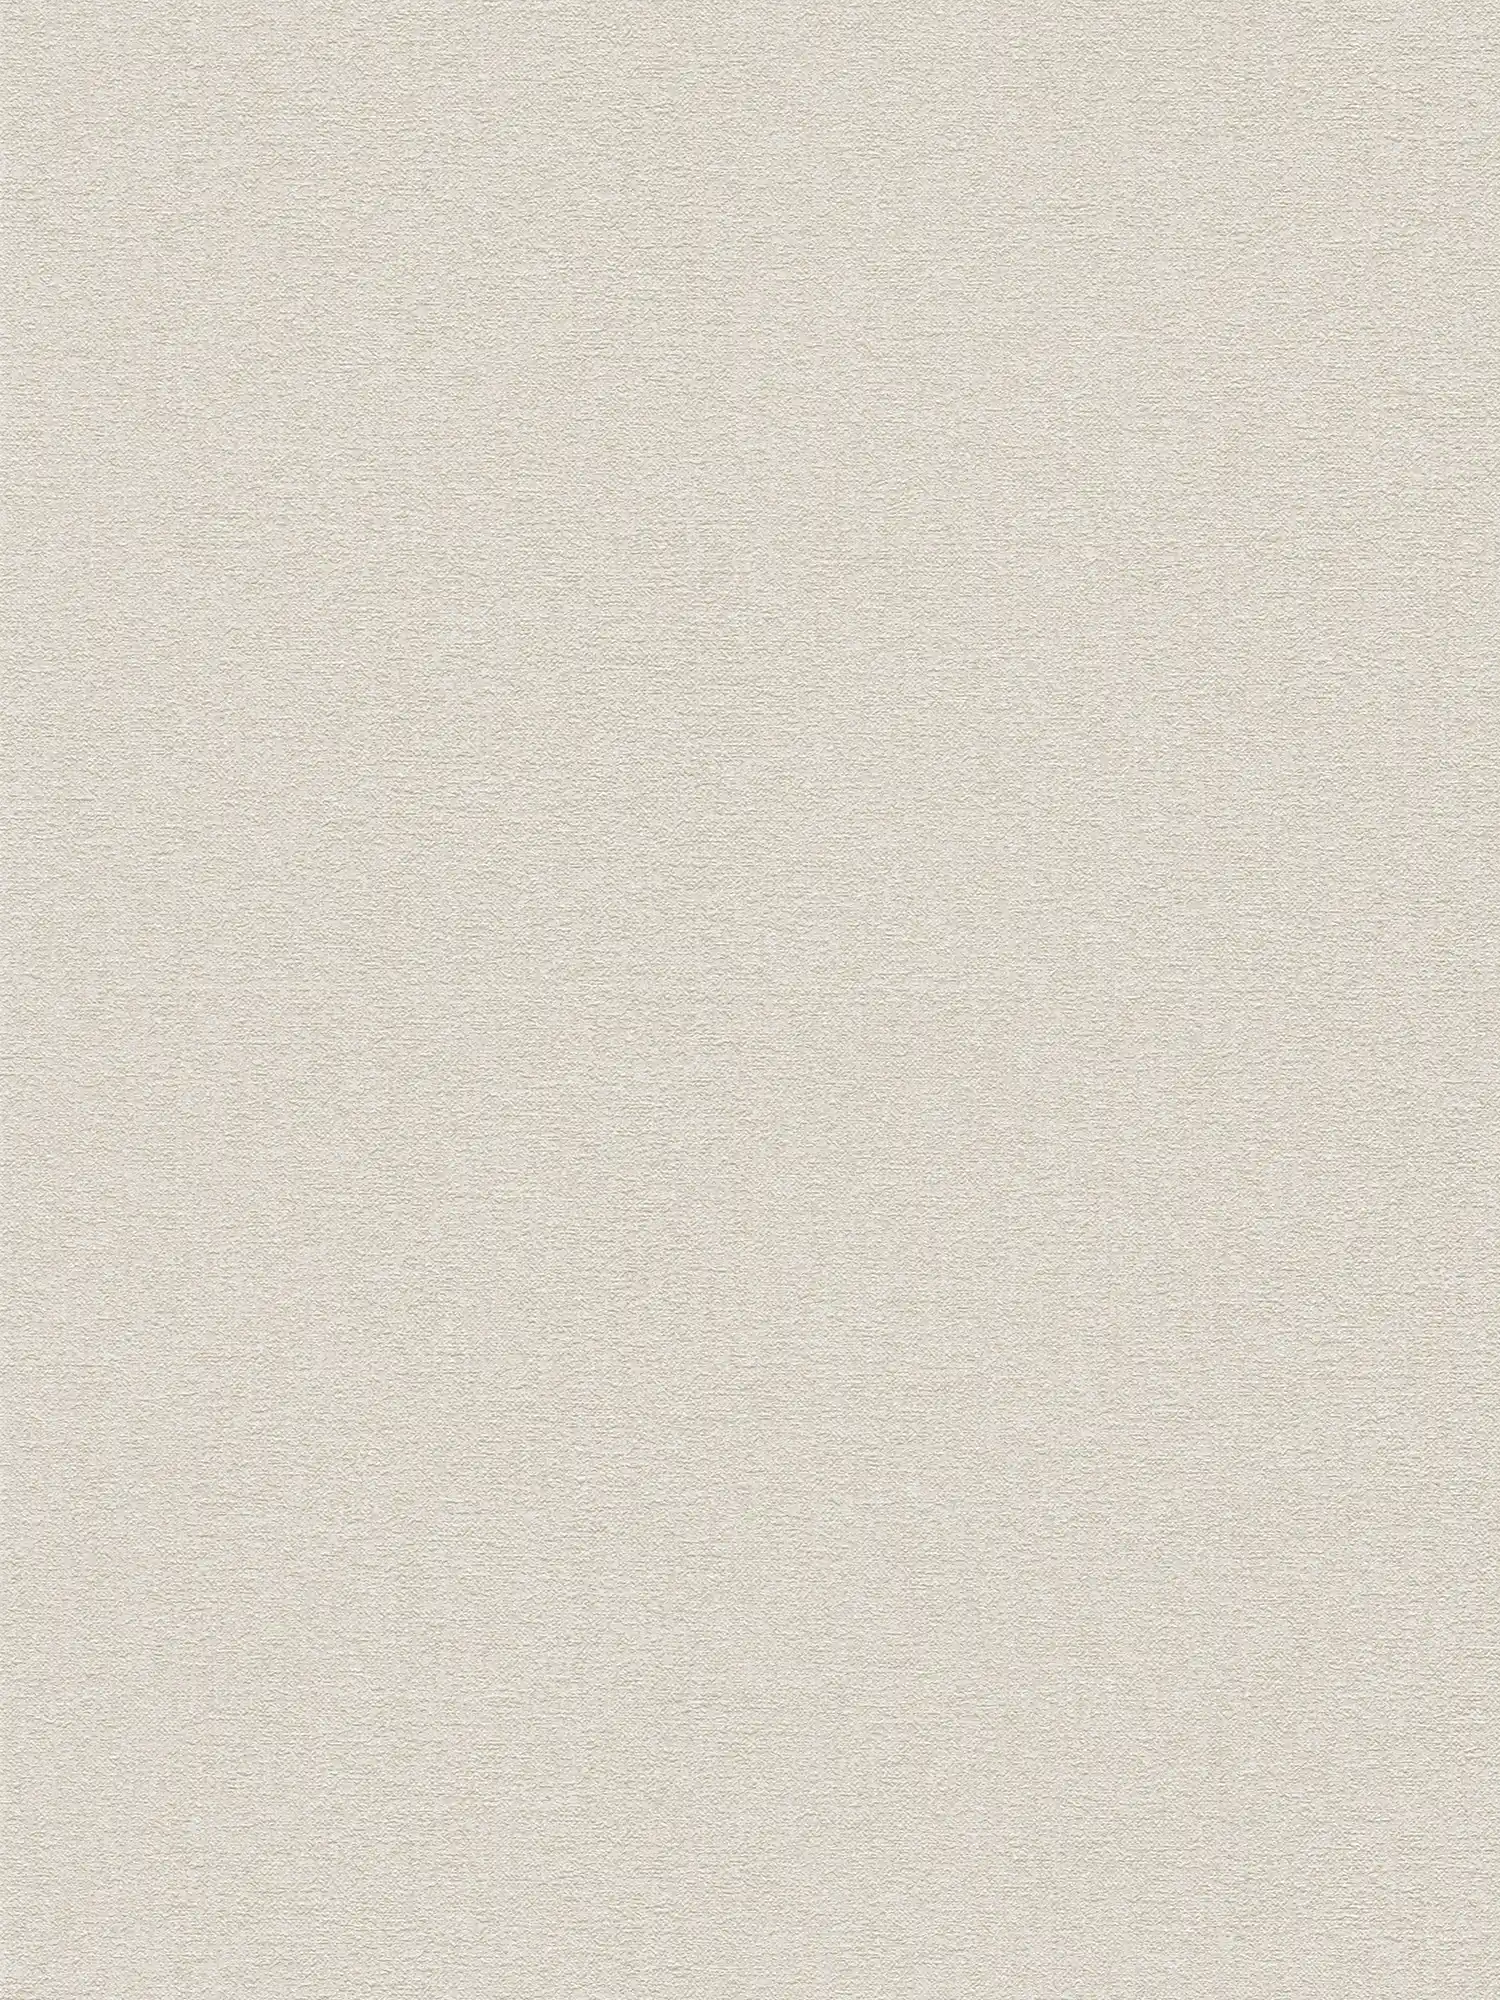 Papel pintado unitario con textura lisa - beige, crema
